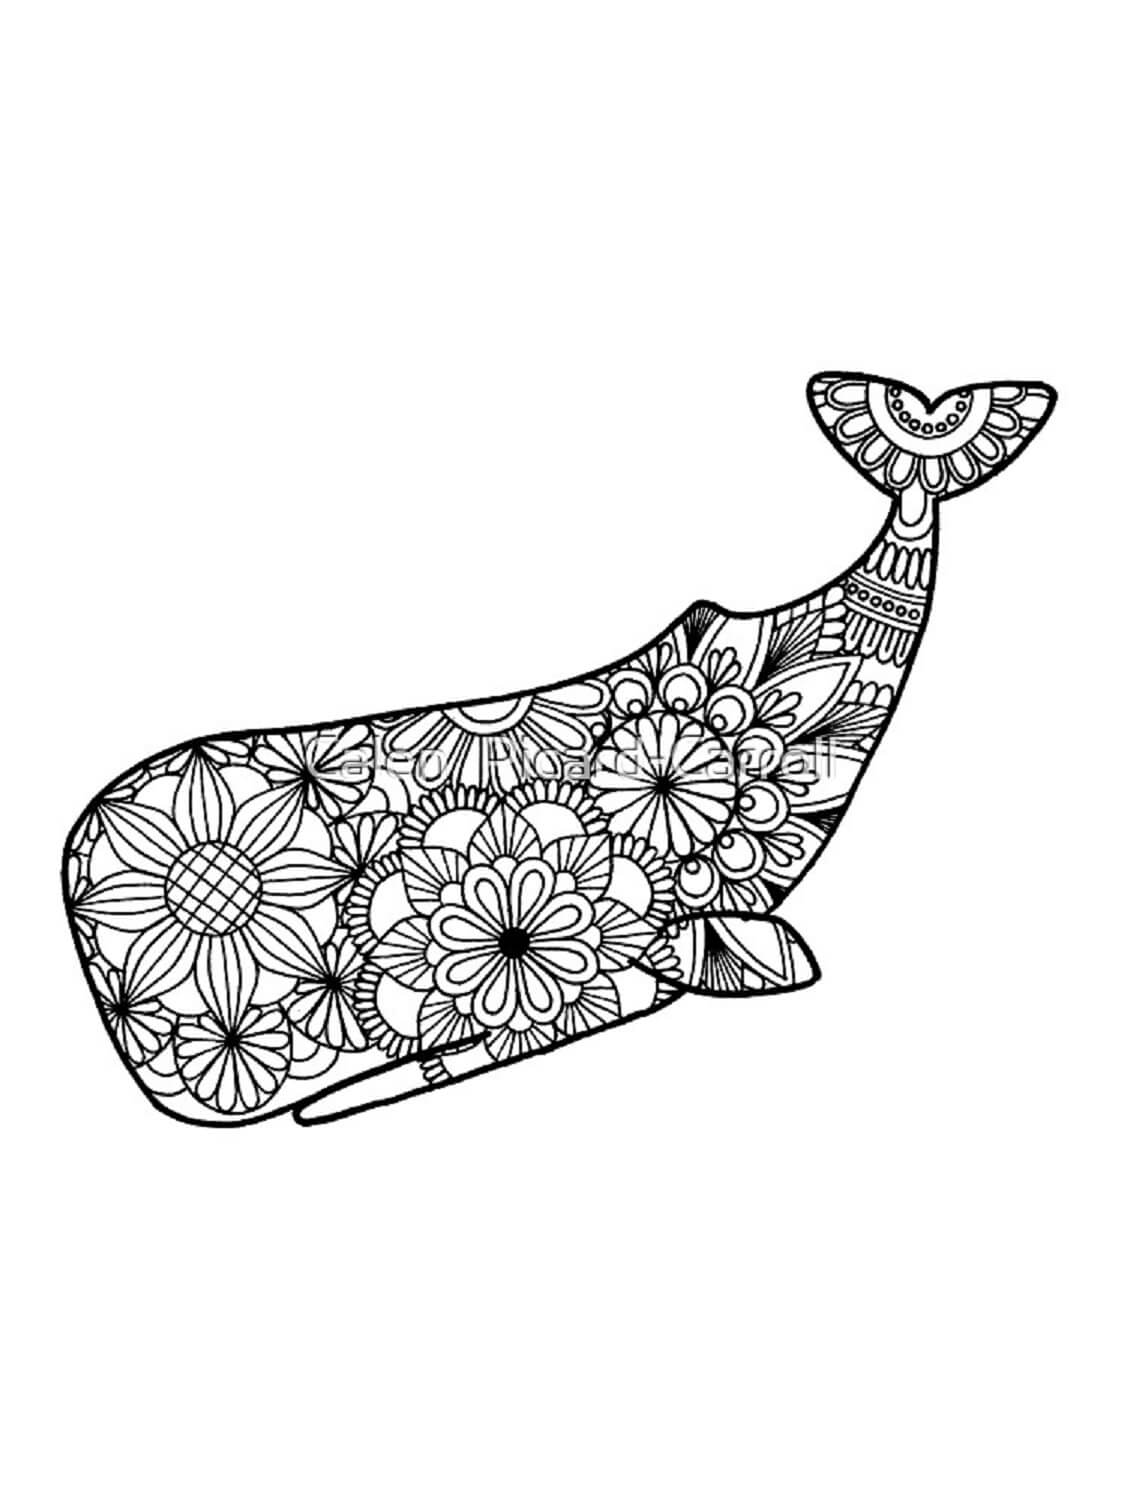 Mandala Whale Coloring Page - Sheet 7 Mandalas